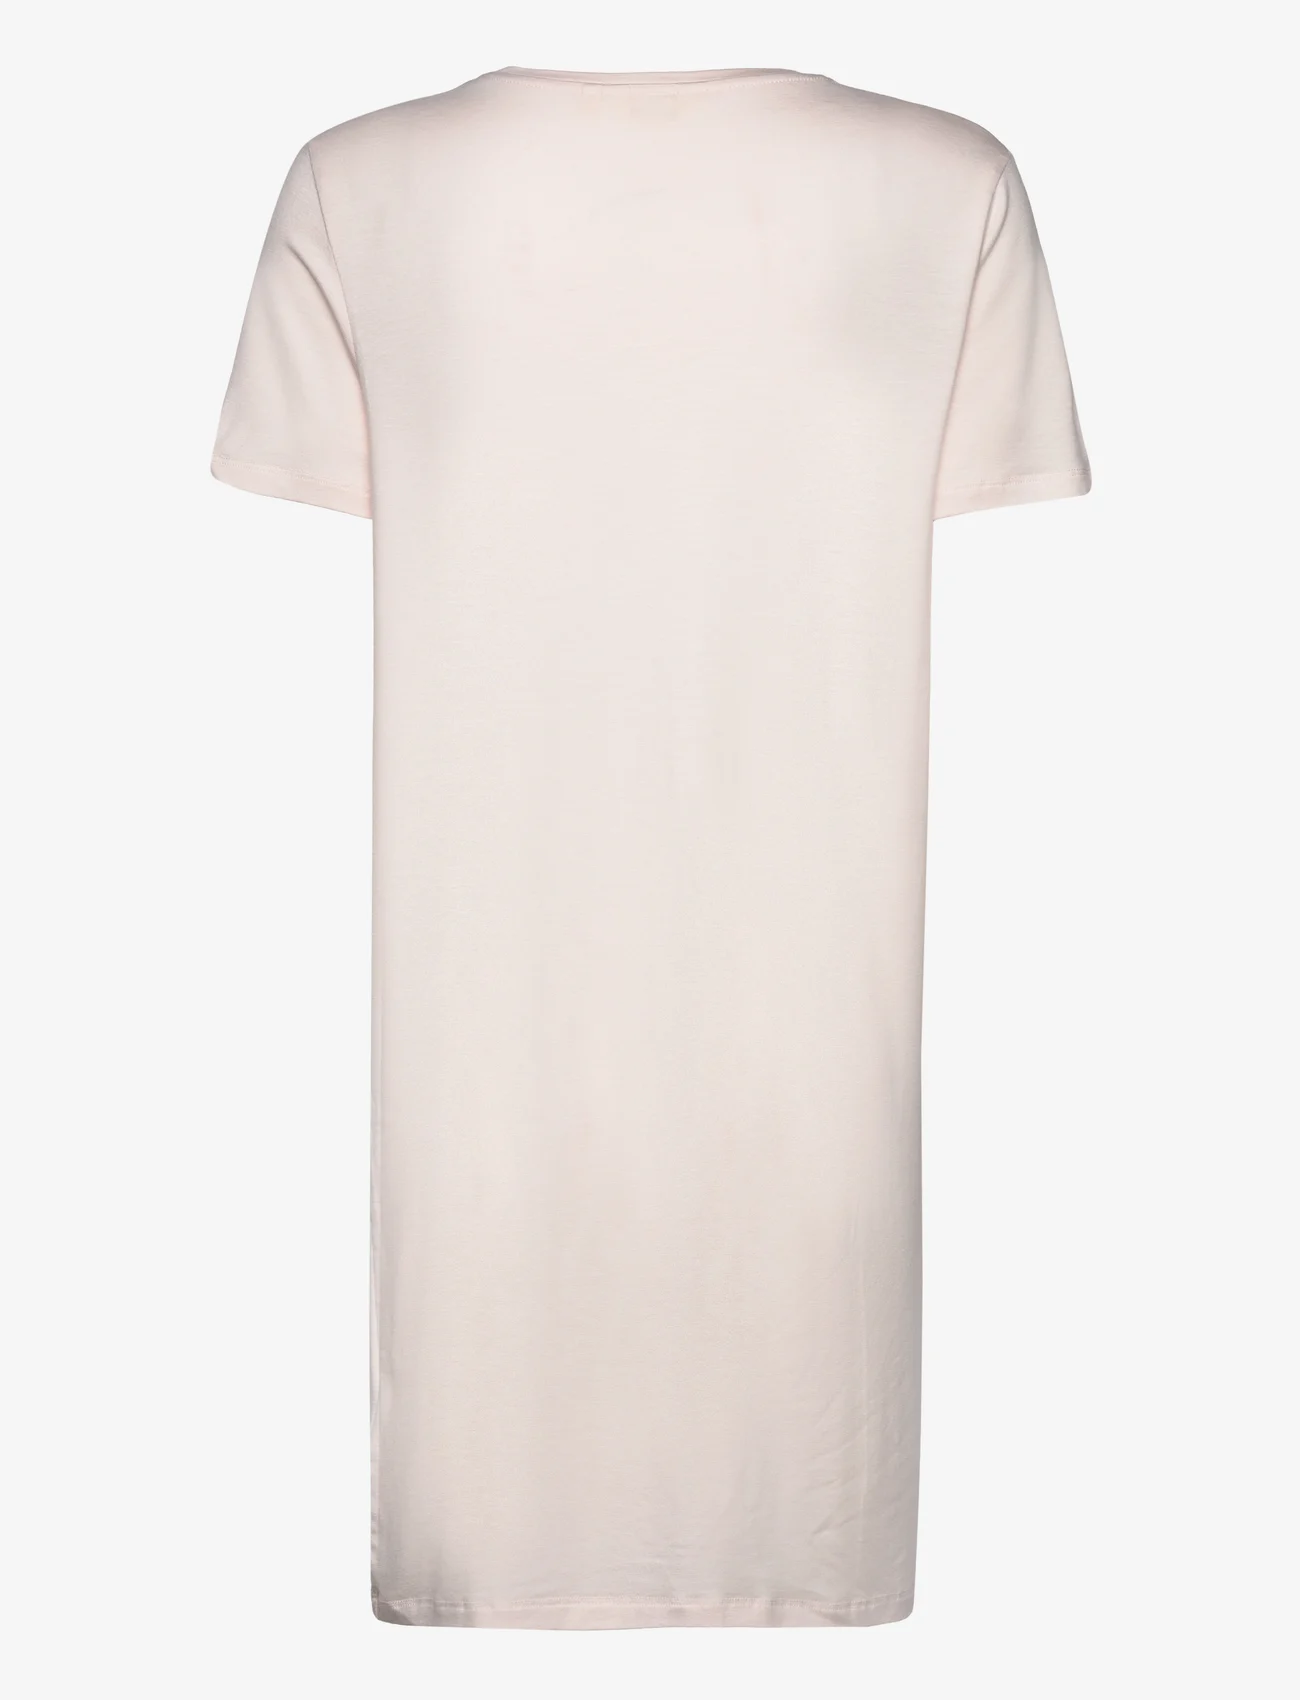 Basic Apparel - Jolanda Tee Dress - t-skjortekjoler - almost mauve - 1